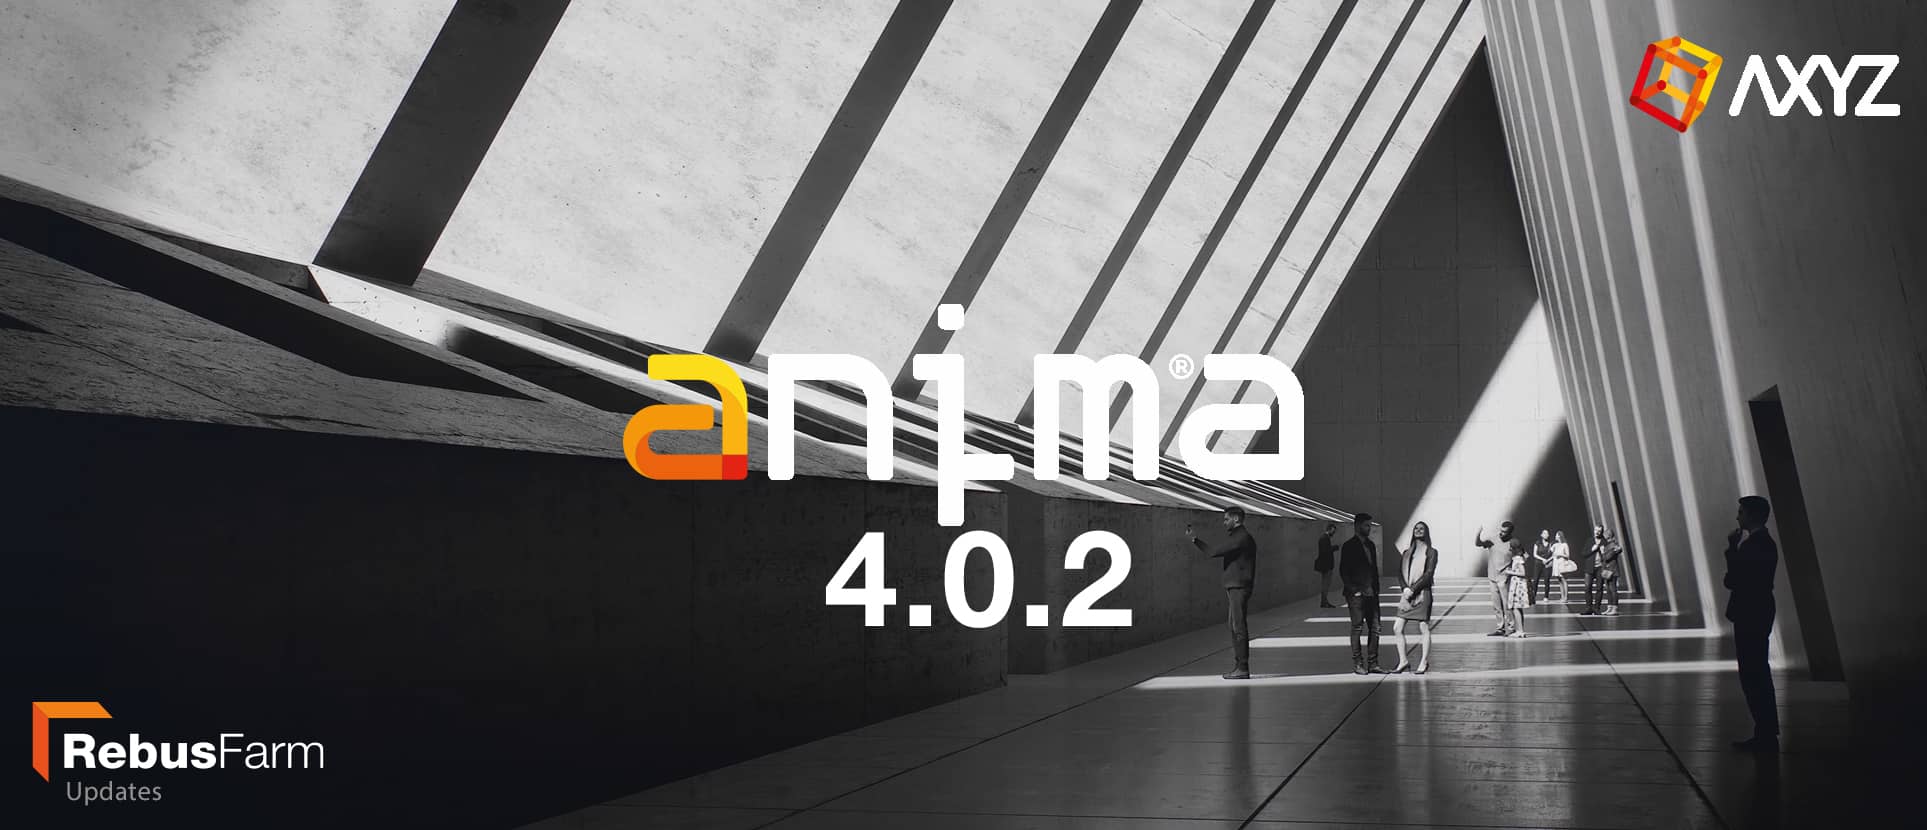 AXYZ Anima 4.0.2 update